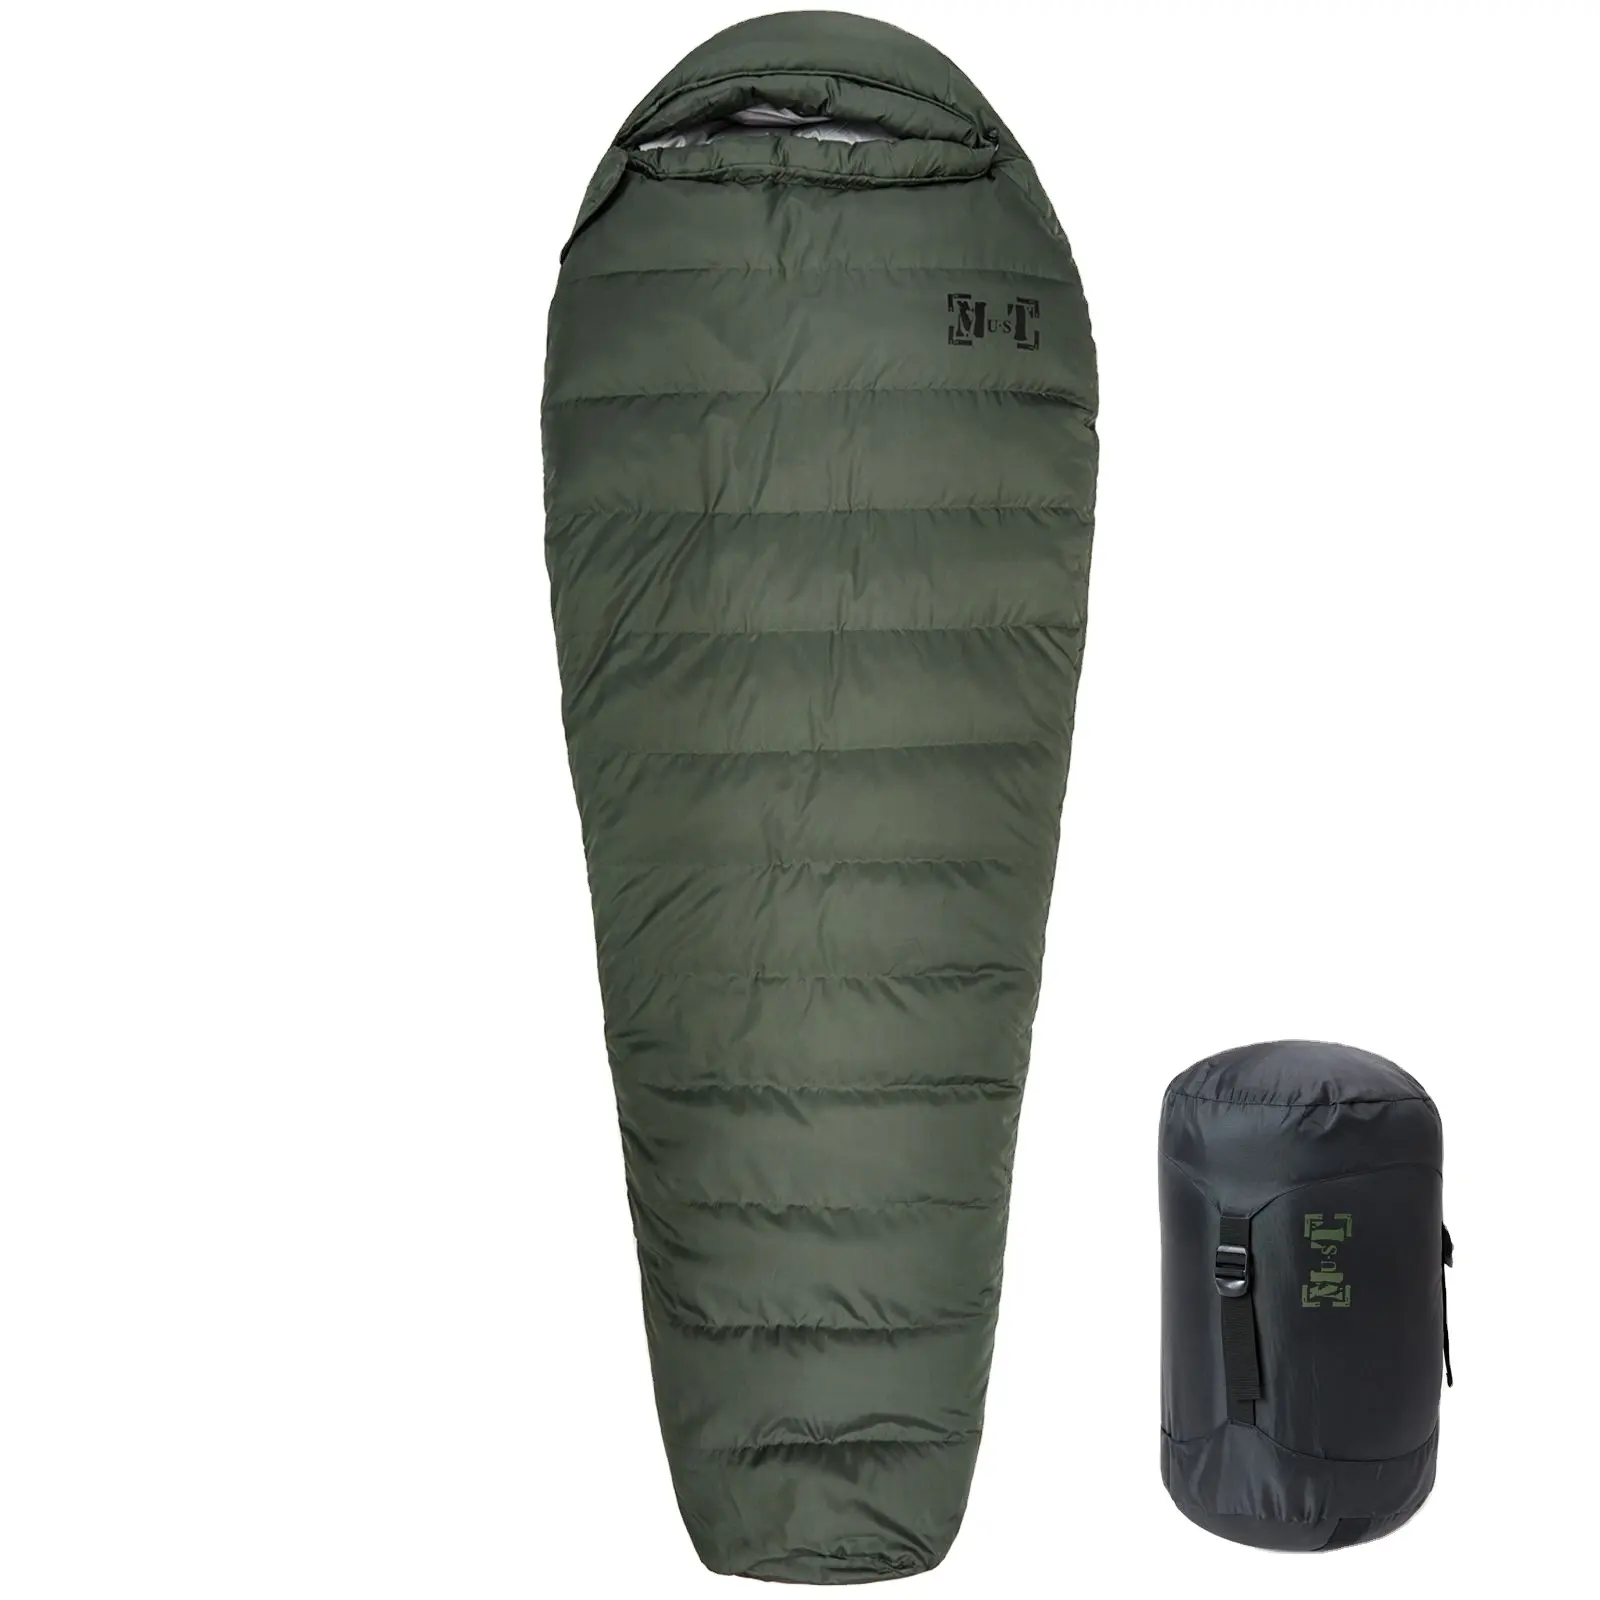 AKmax Ranger Down Mummy Anti-Extrem Cold Sleeping Bag Portable Camping Hiking Sleeping Bag Olive Green